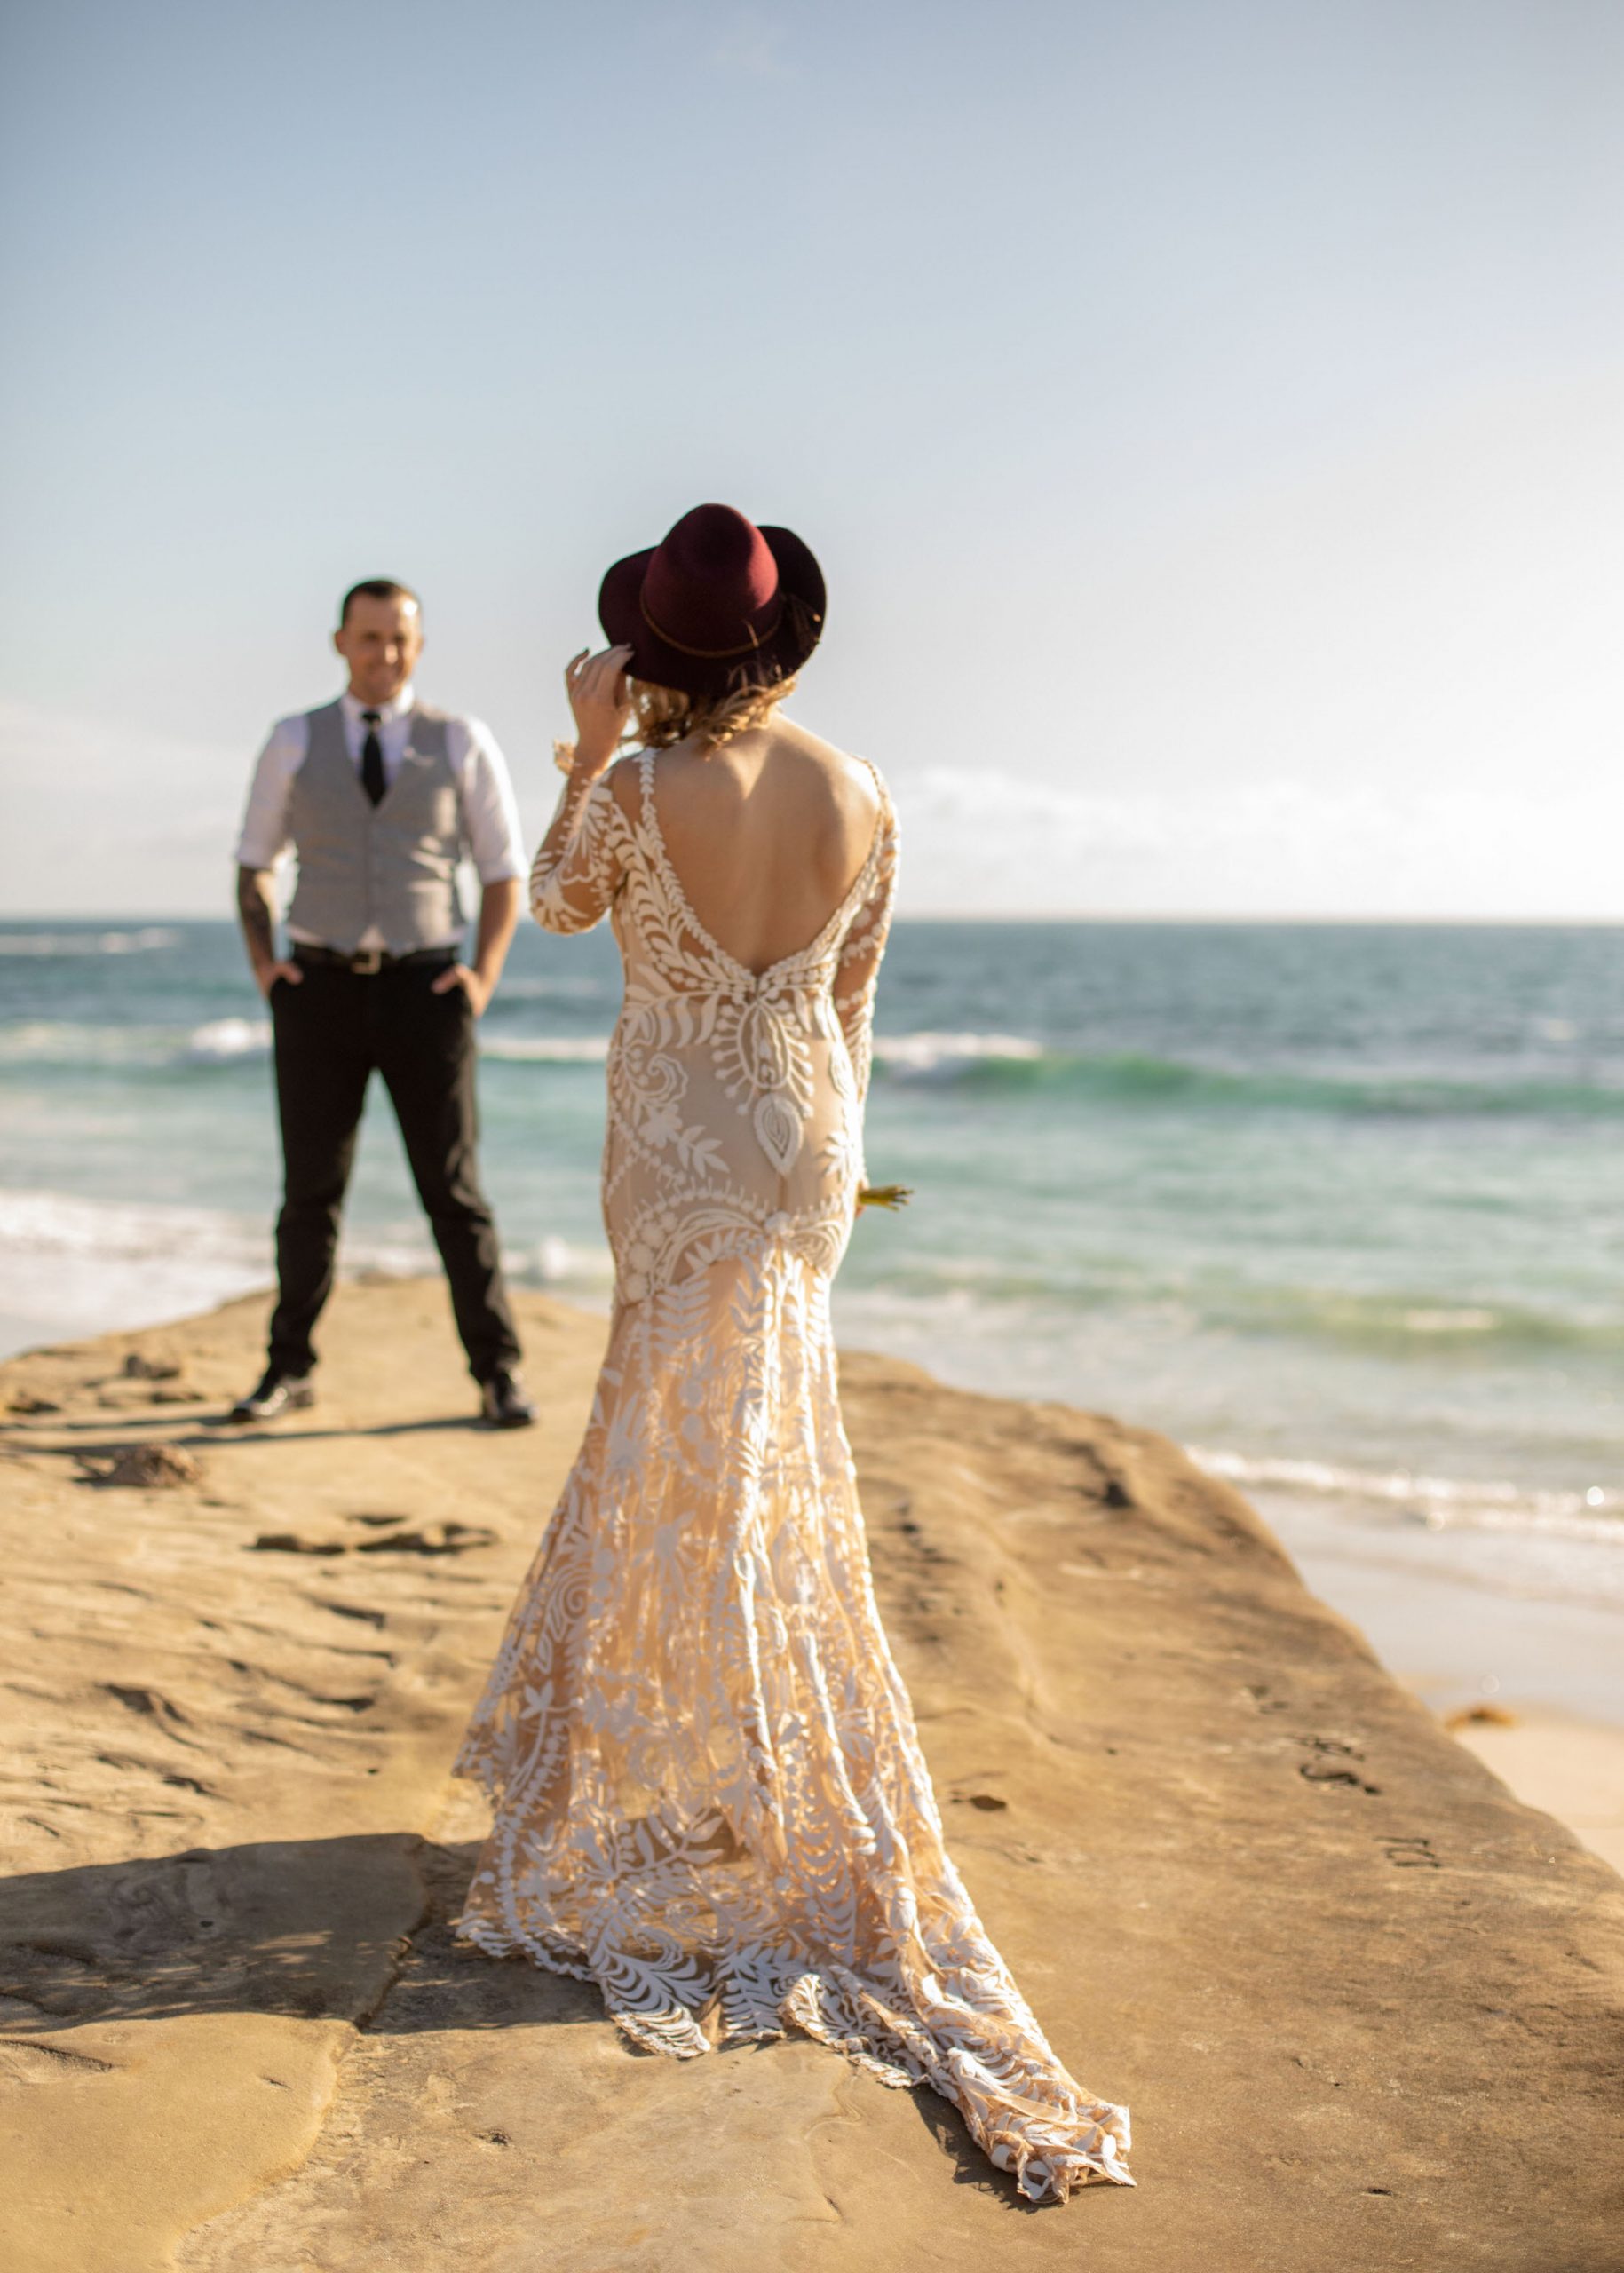 Bride and groom sunset portraits at Windansea Beach La Jolla, California.